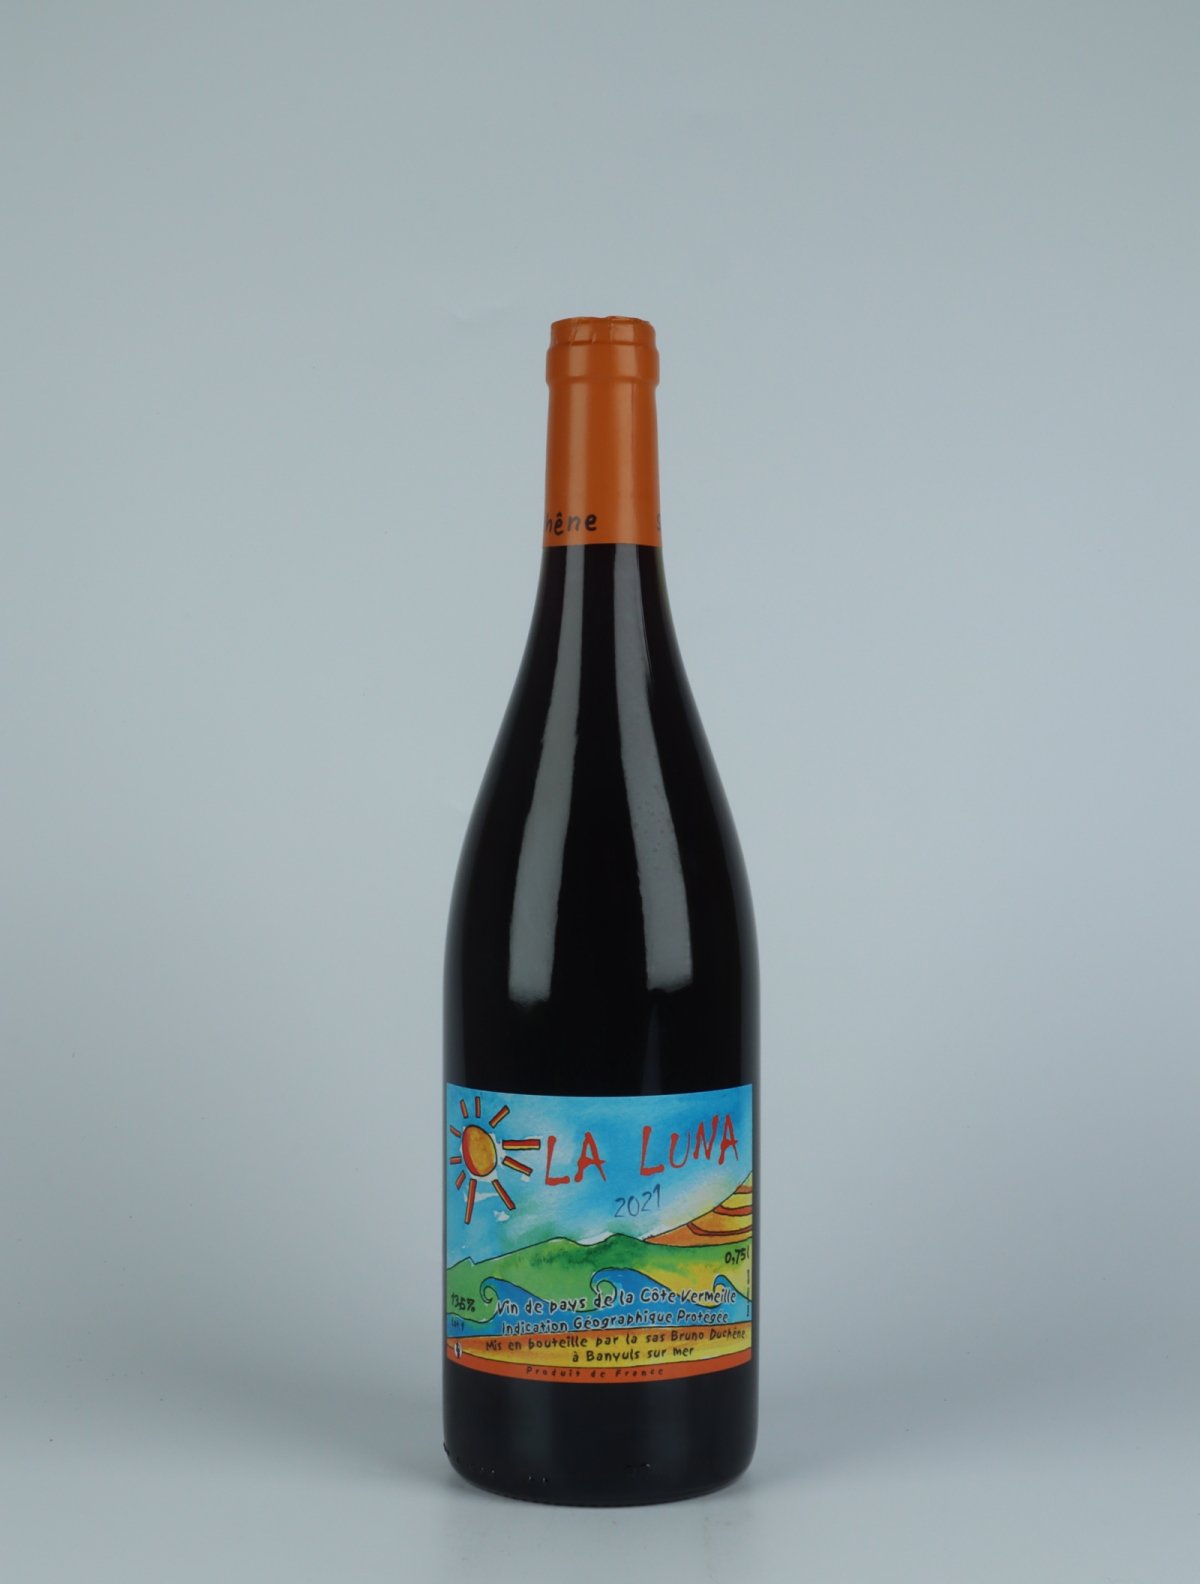 A bottle 2021 La Luna Rouge Red wine from Bruno Duchêne, Rousillon in France